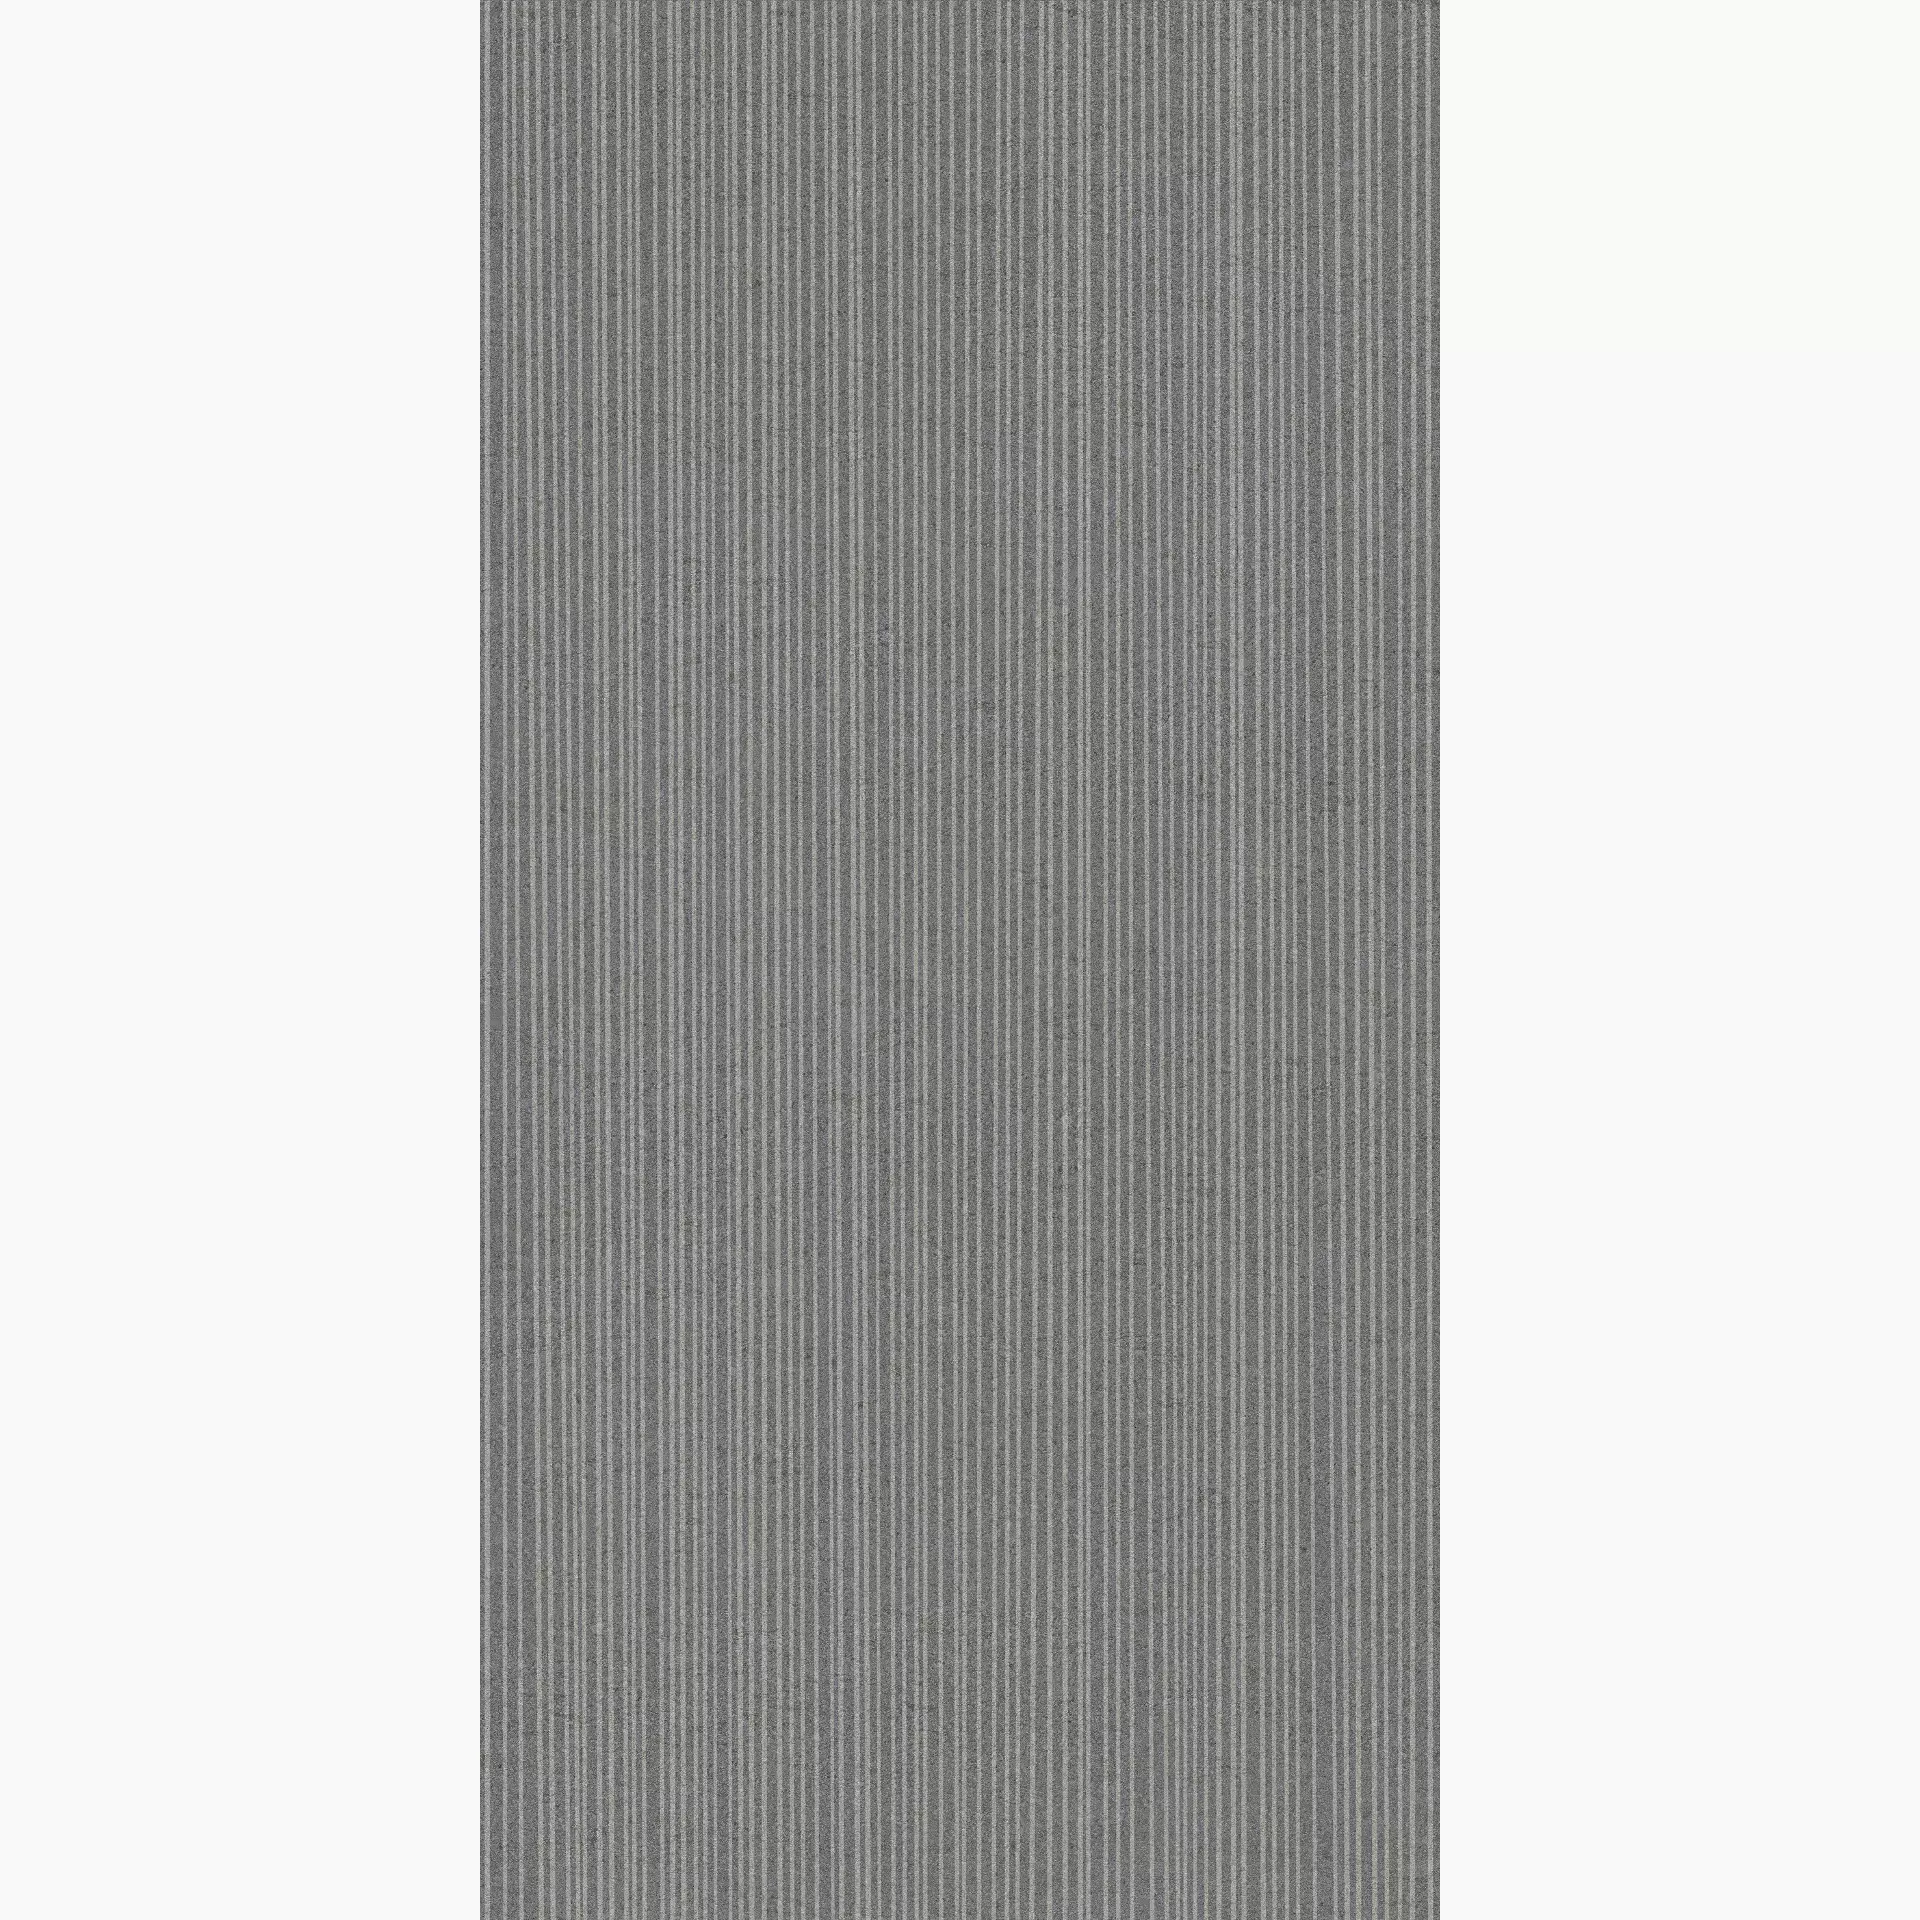 Coem Tweed Stone Graphite Naturale 0TW710R 75x149,7cm rectified 10mm